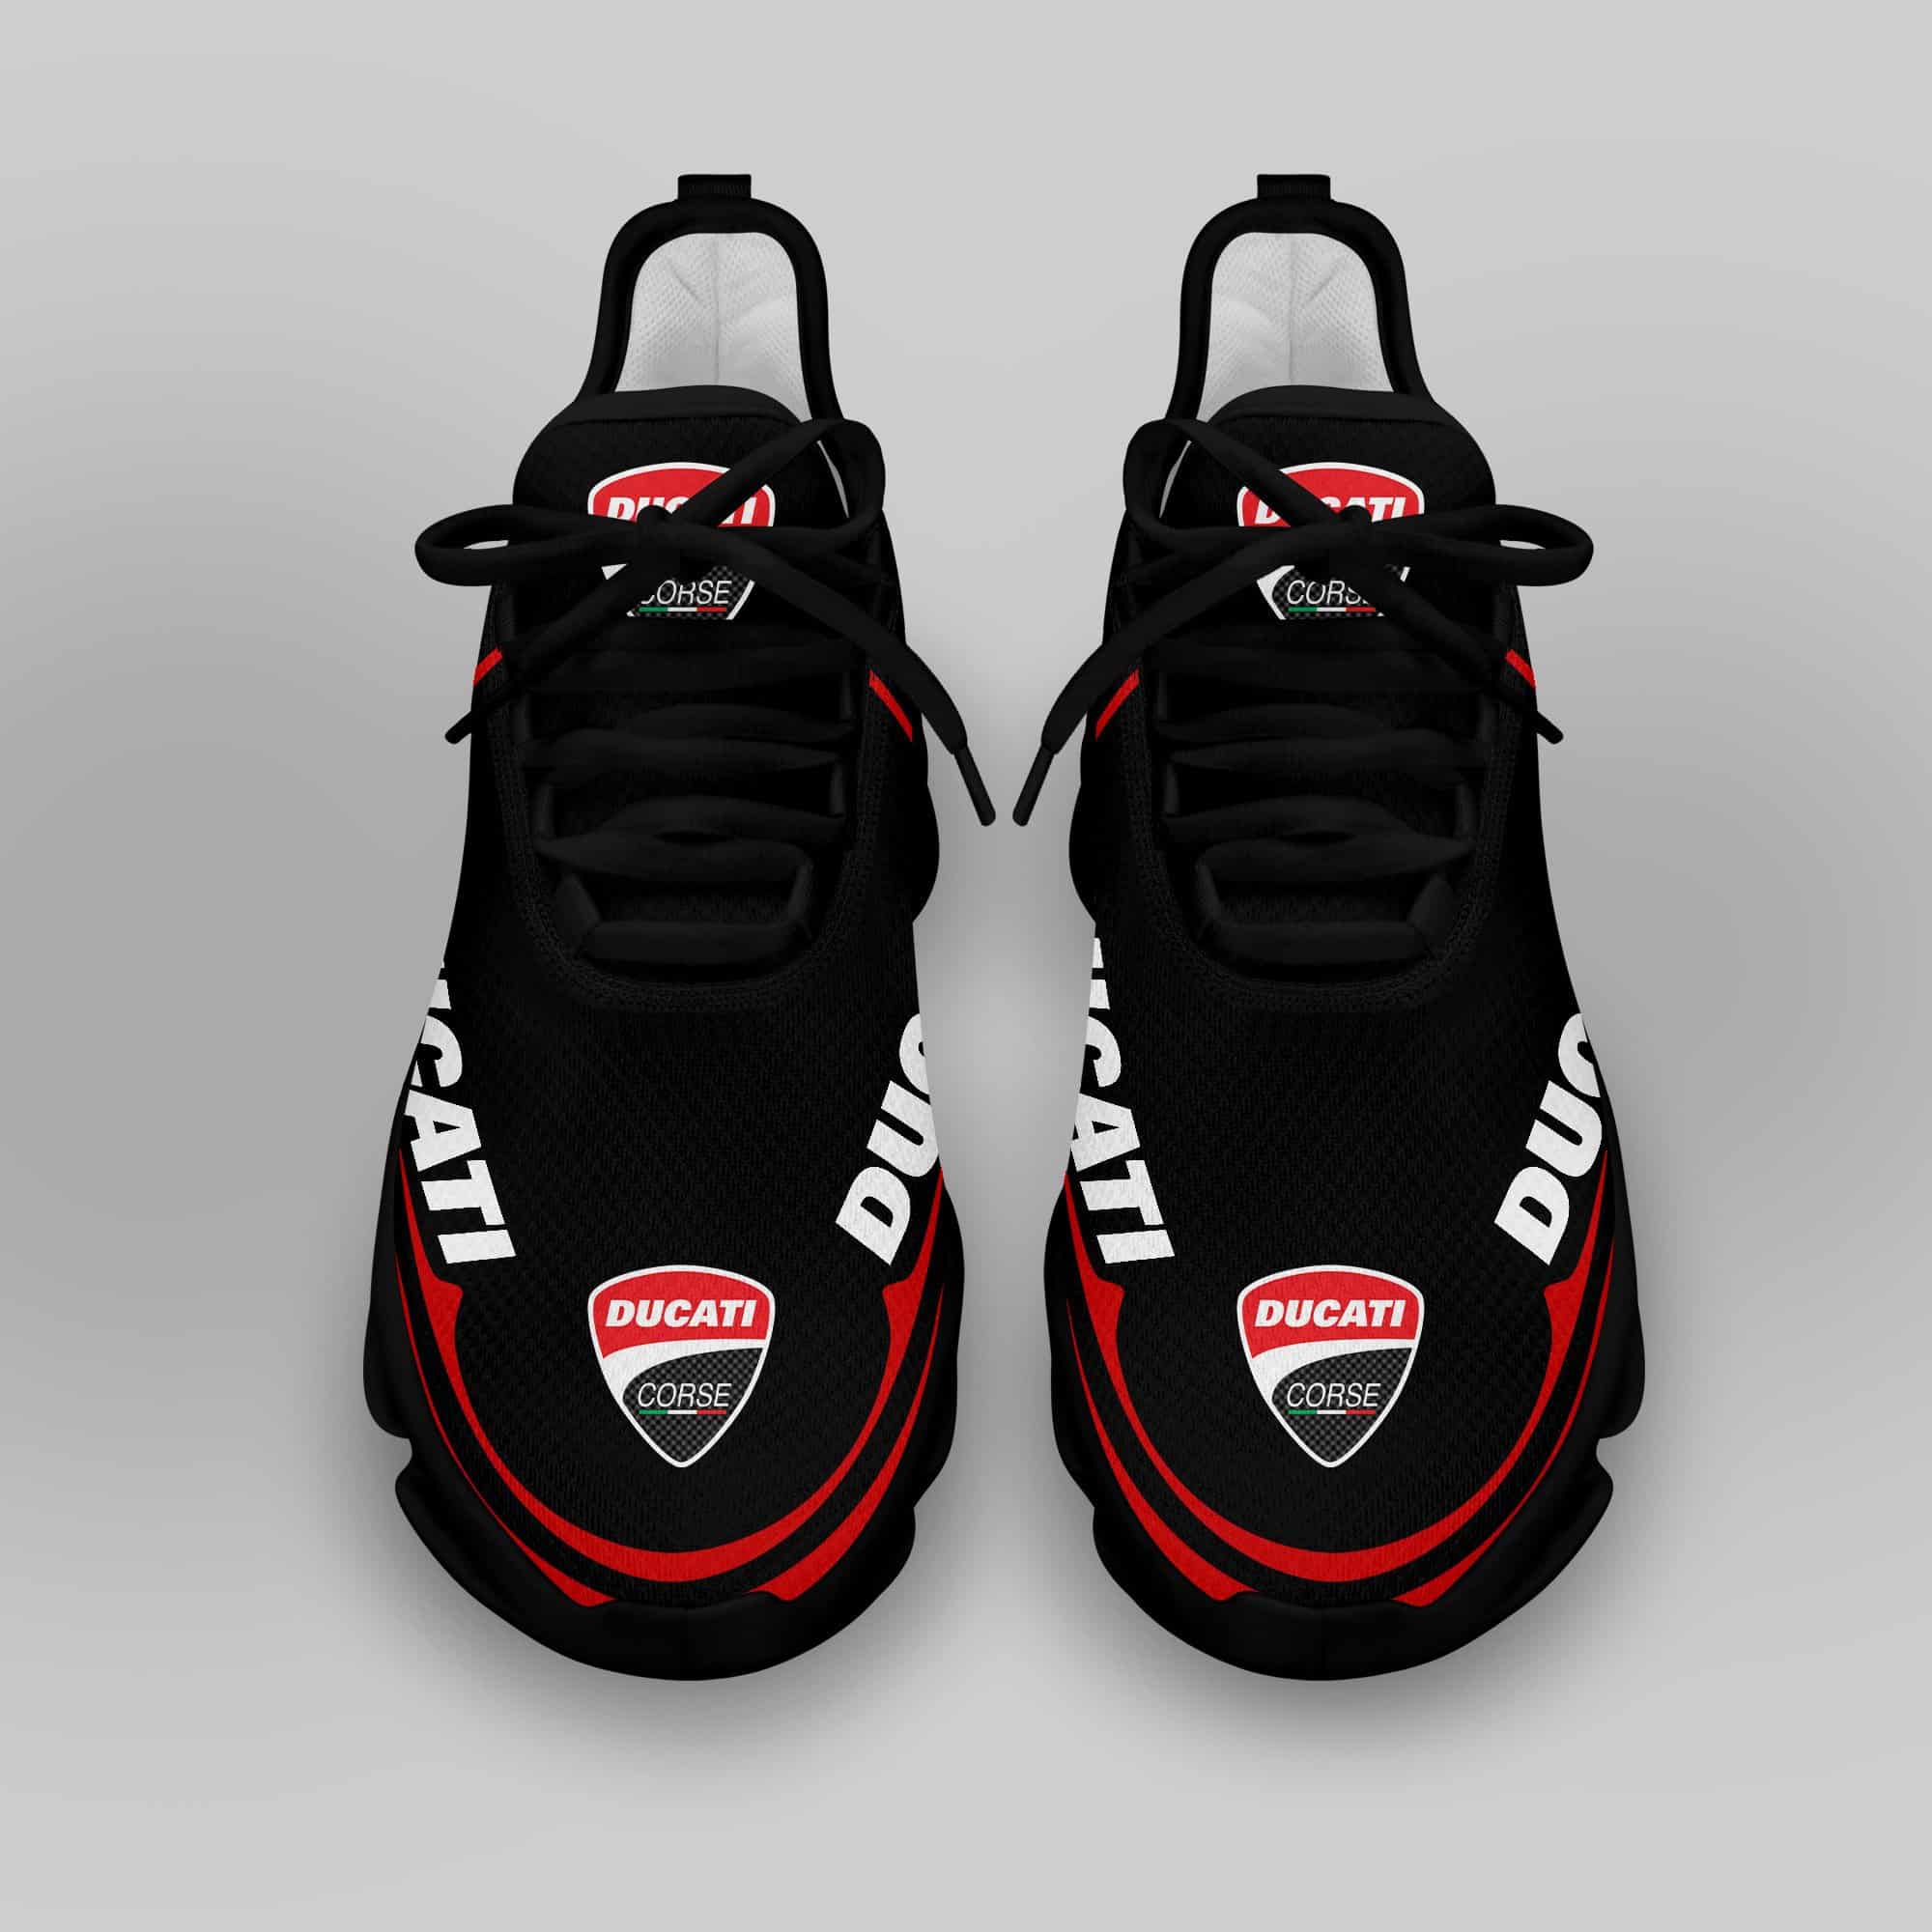 Ducati Racing Running Shoes Max Soul Shoes Sneakers Ver 42 4